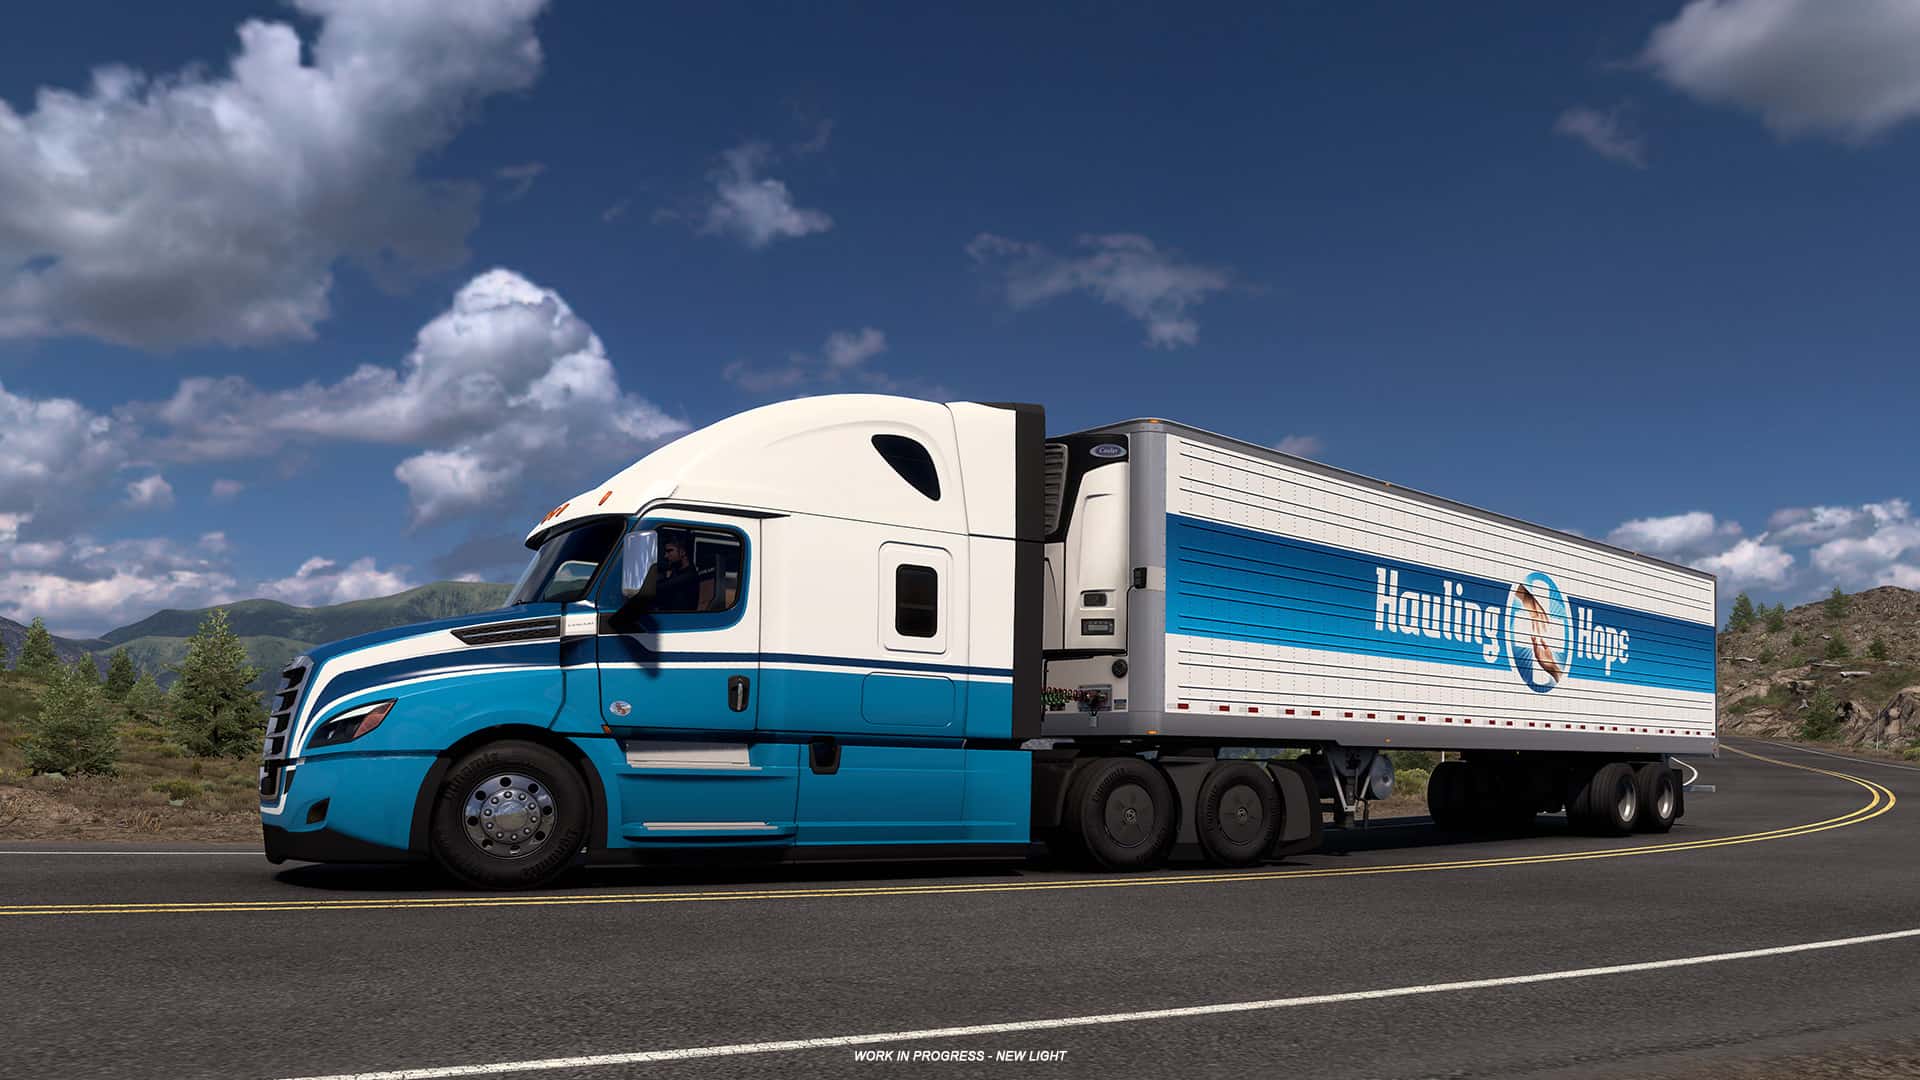 Keep on trucking: Dedicated servers added to Euro Truck Simulator 2 and American Truck Simulator